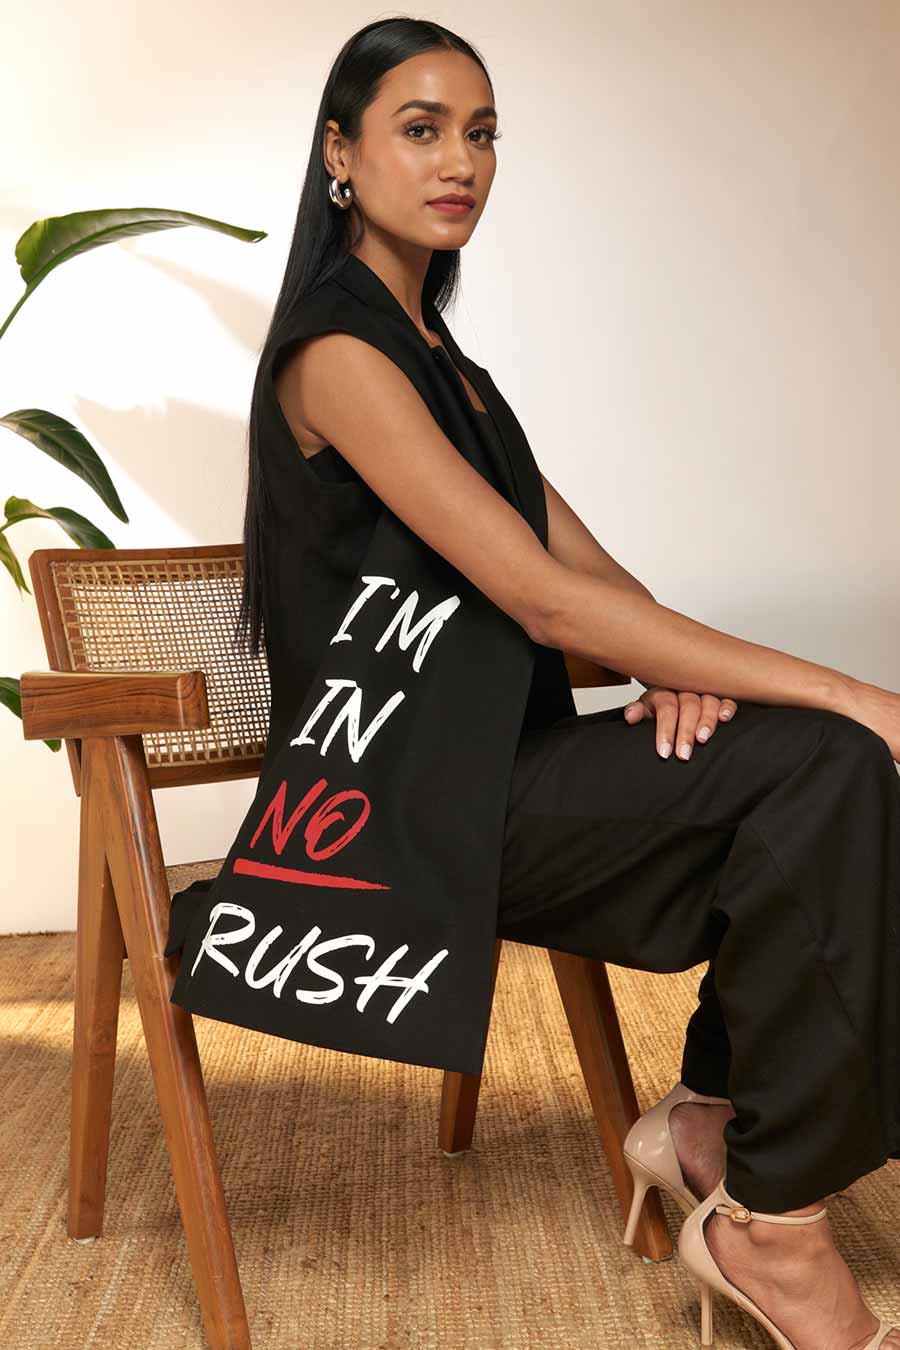 Black "I'M IN NO RUSH" Slogan Blazer